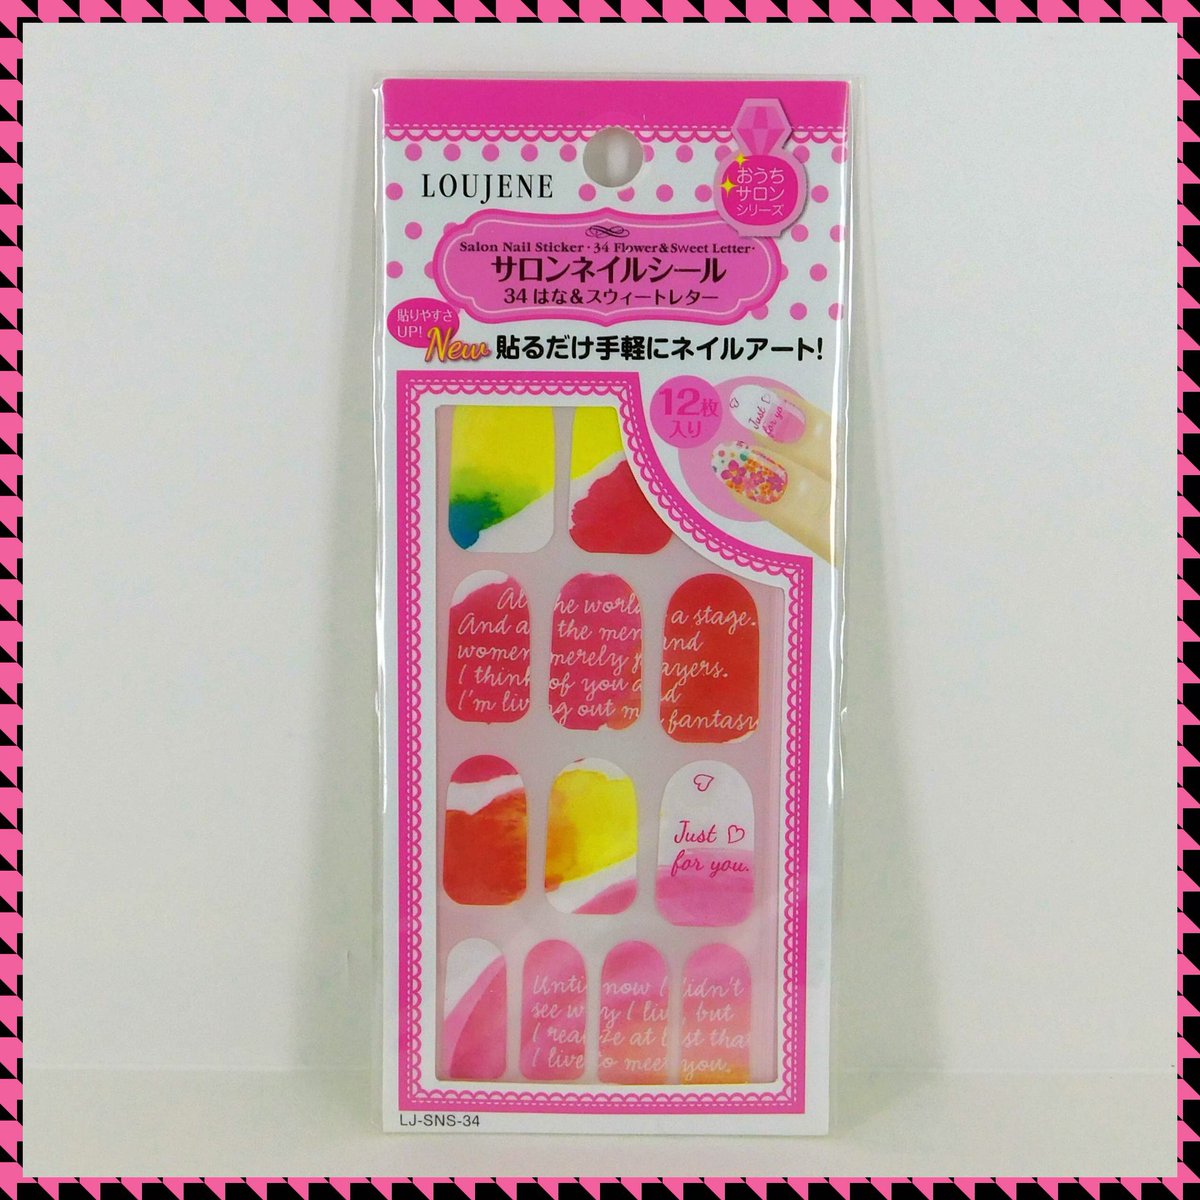 test ツイッターメディア - LOUJENE TOKYO Salon Nail Sticker  (34 Flower & Sweet Letter) / サロンネイルシール（34はな＆スウィートレター）
https://t.co/czbSPlEeAI

#nail #ネイル #cando #キャンドゥ #nailsticker #ネイルアート #nailart #nails #loujene #loujenetokyo #ネイルシール #100均 #100yen #blog #review #爪 https://t.co/lrR1JJBtCM